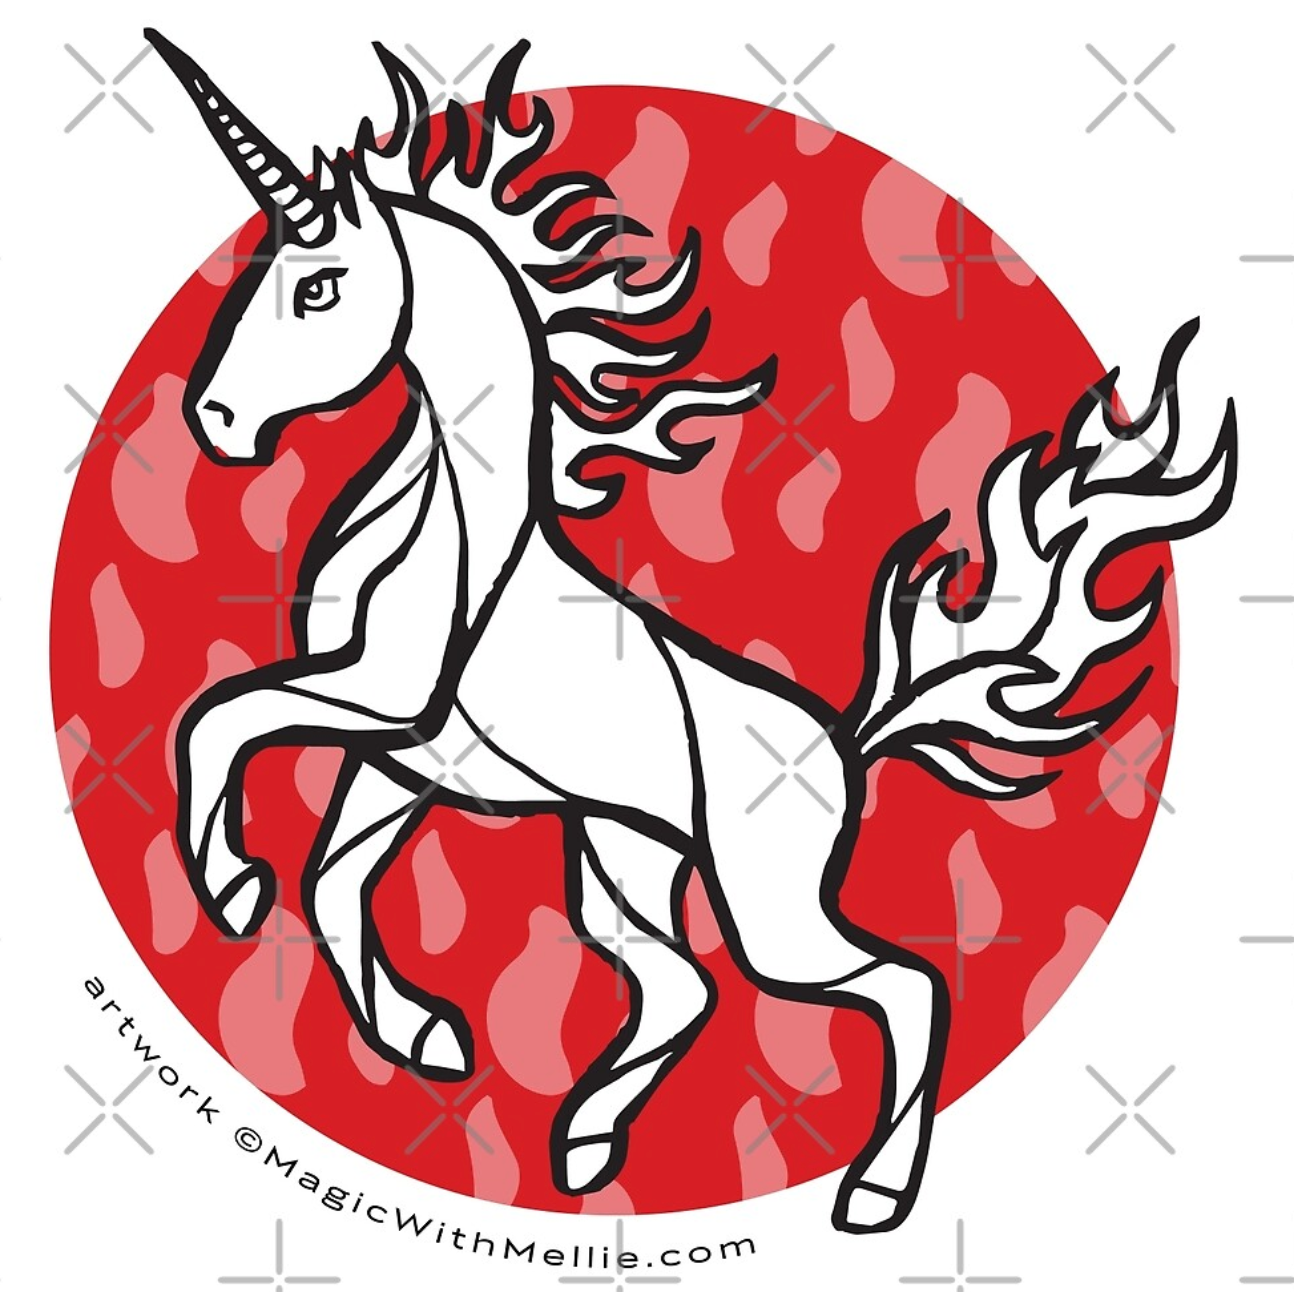 Inktober Unicorn: Fire Unicorn with Flames